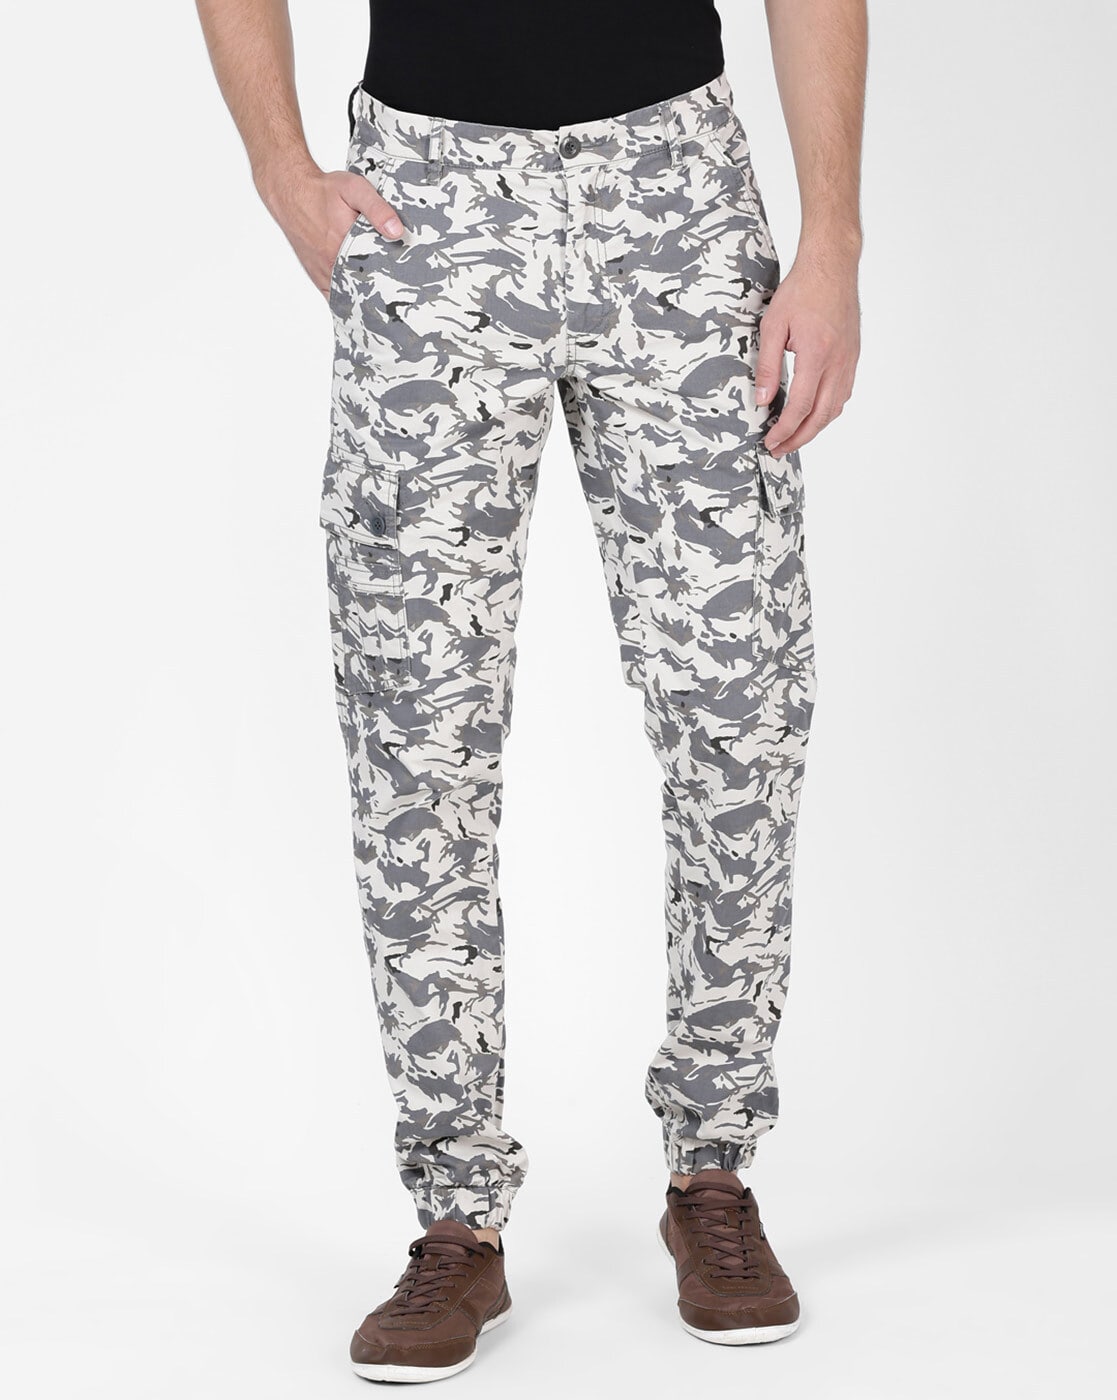 Elephant Bone Mens Camouflage Cargo Pants Drawstring Tactical Size 3XL NWT!  | eBay